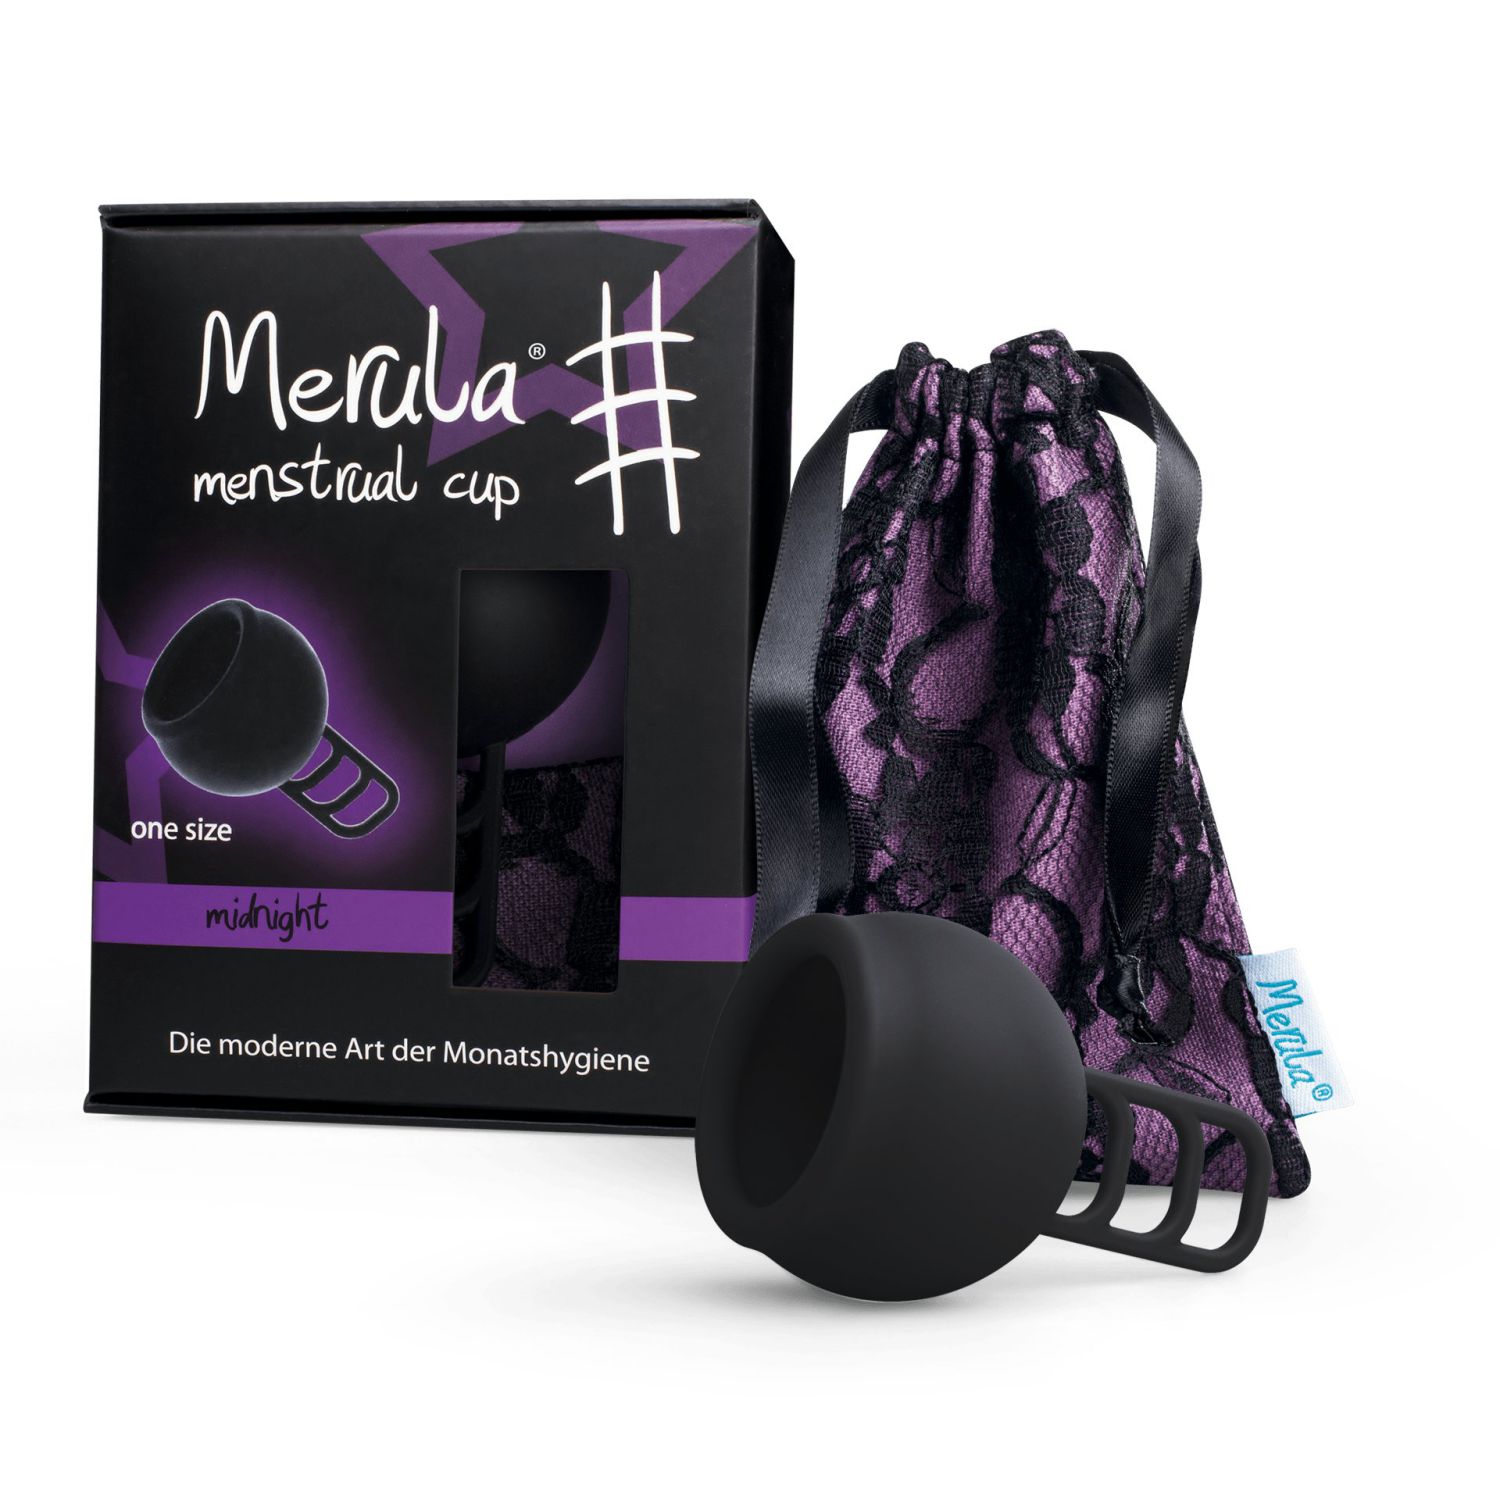 Merula One Size Menstrual Cup